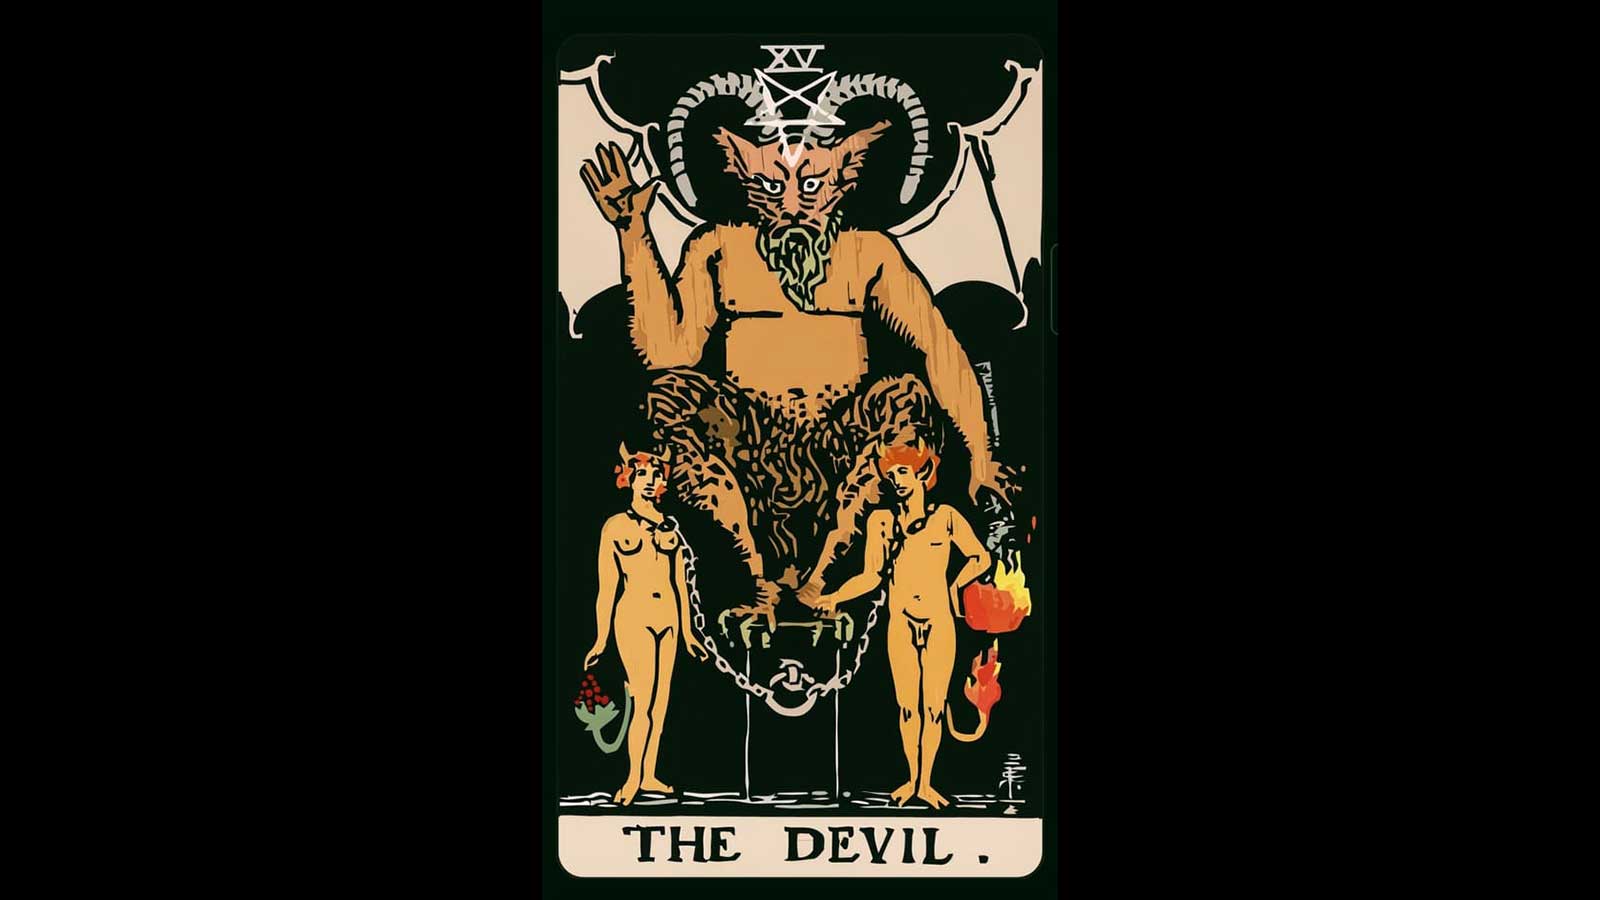 The Devil ความหมายไพ่ยิปซี ไพ่ทาโรต์ : thaitarot.click